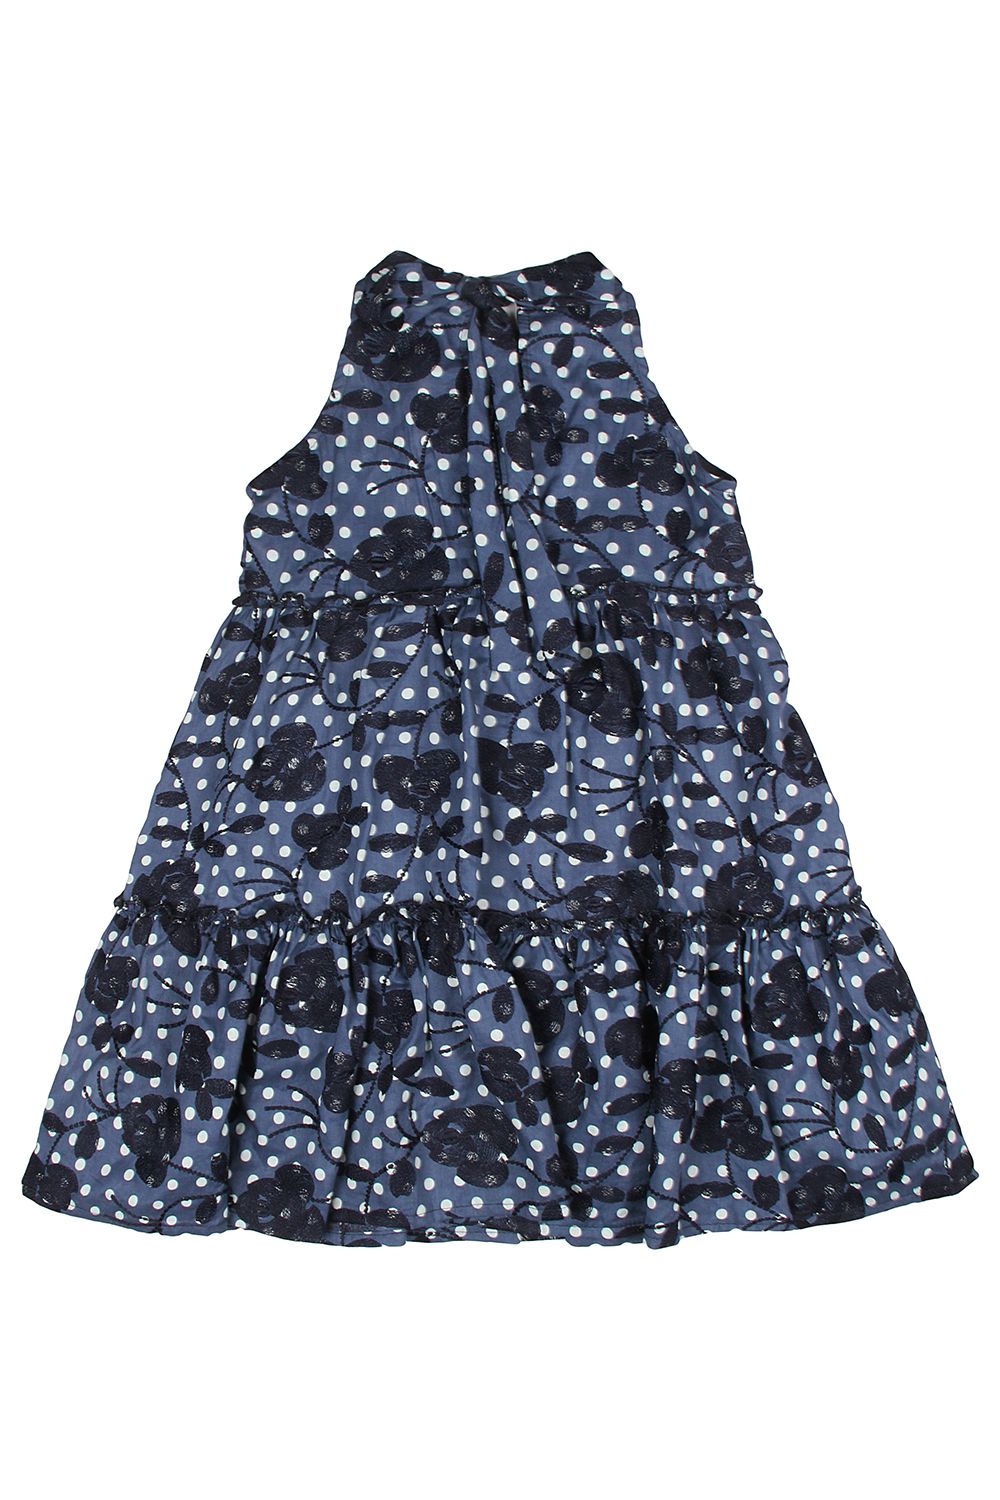 Платье Manila Grace, размер 128, цвет синий MG135 - фото 2